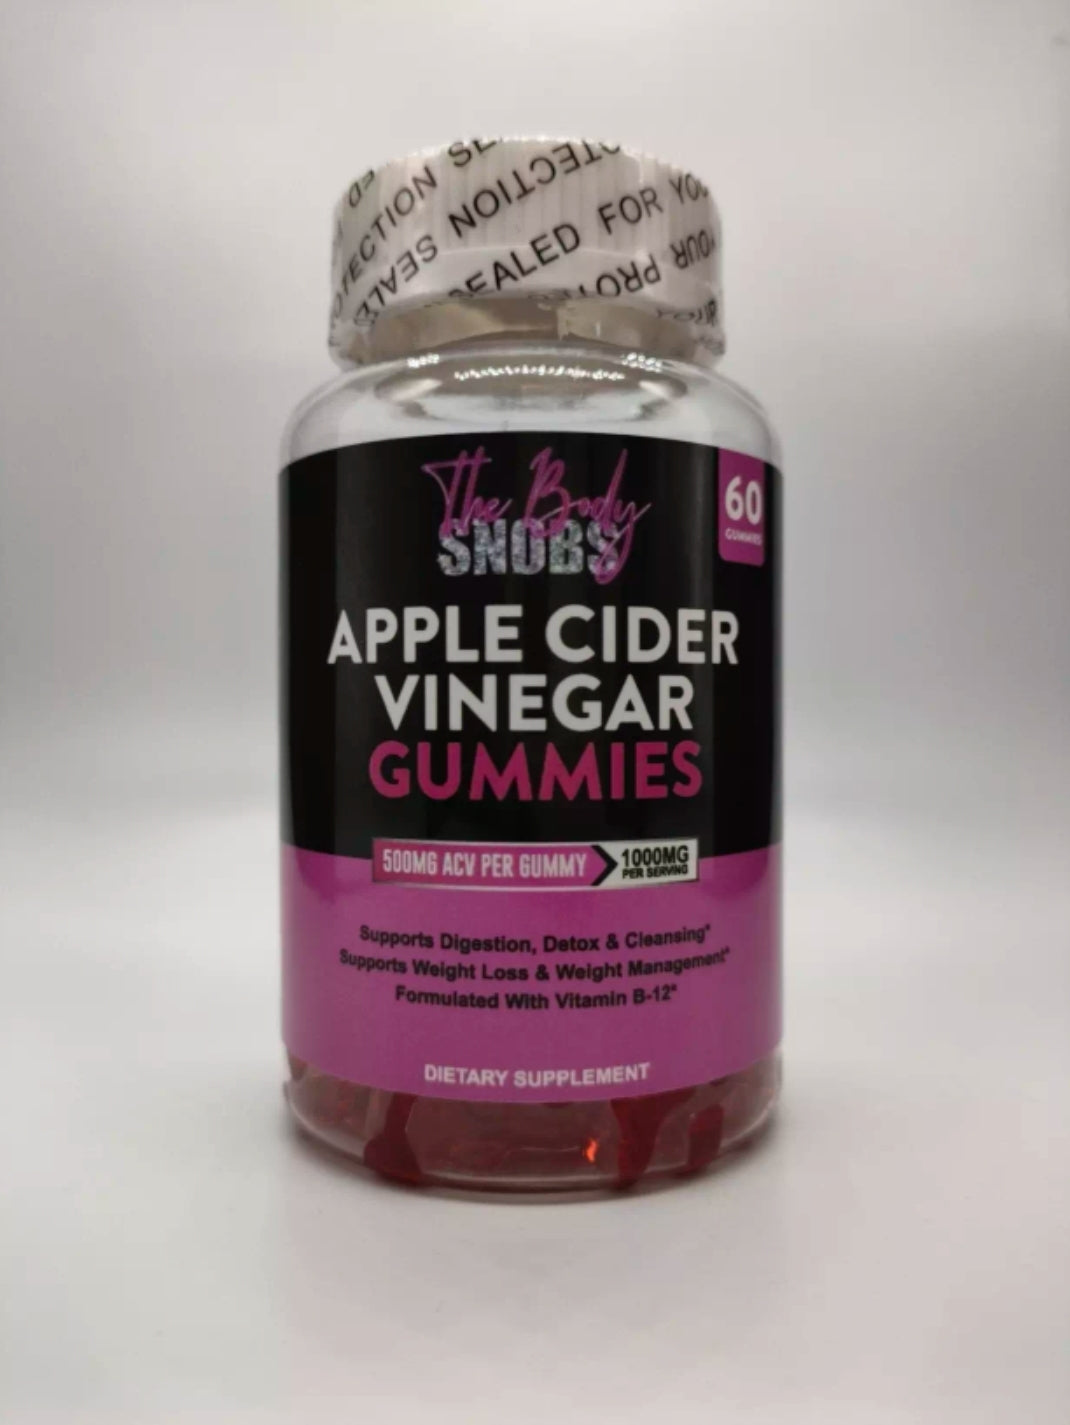 Apple cider vinegar Gummies